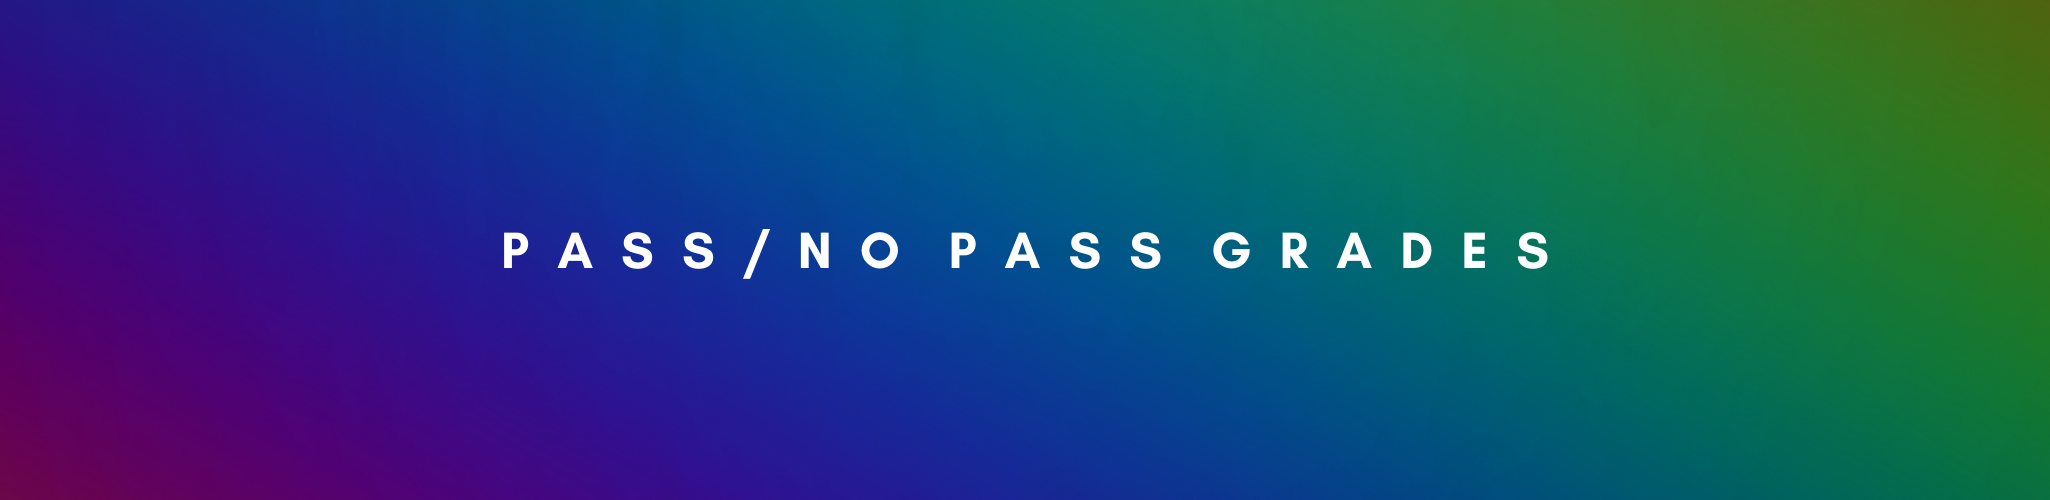 Pass No Pass on Rainbow Banner